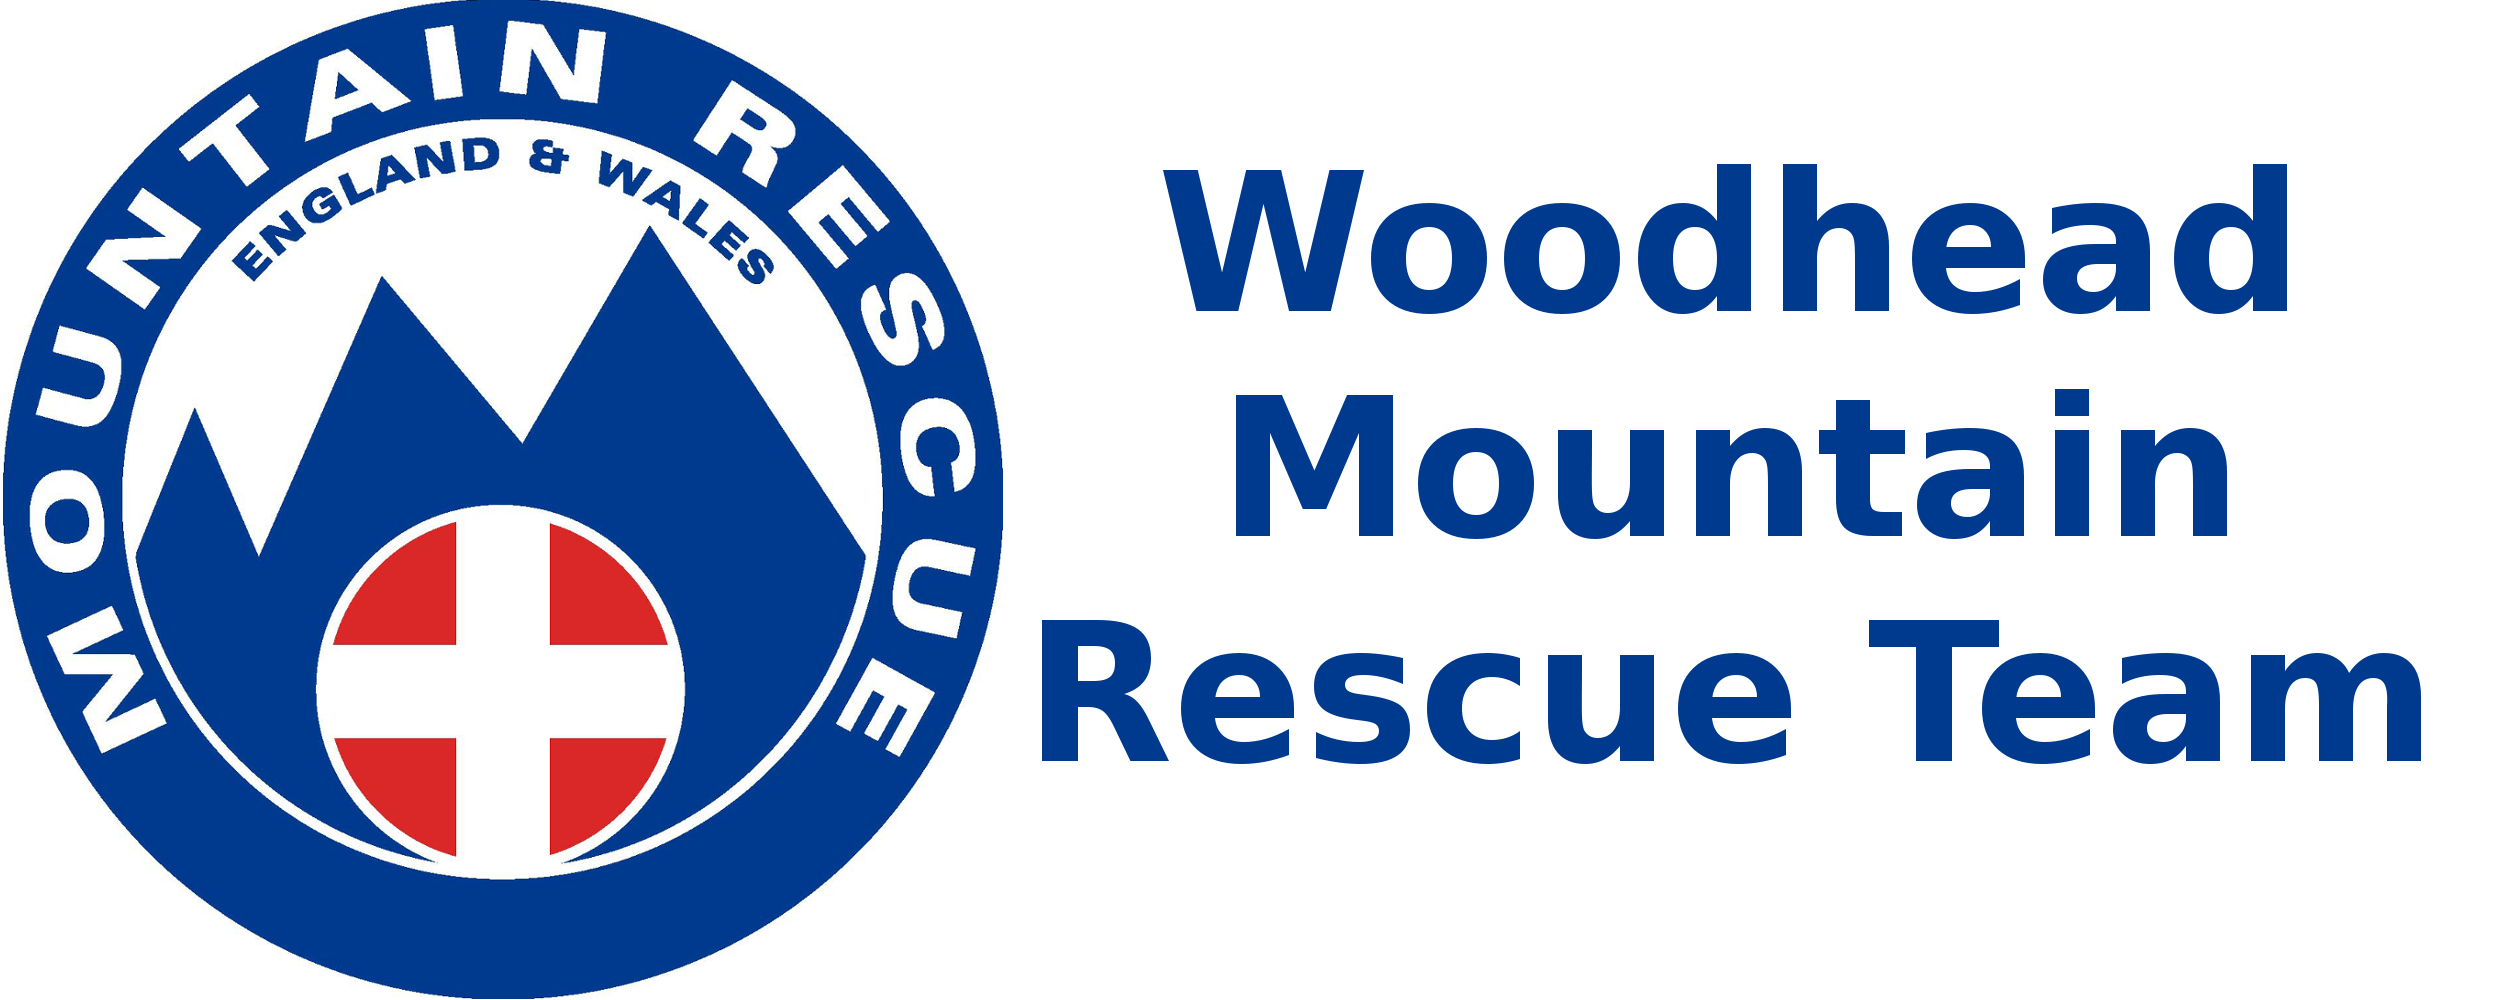 Woodhead Logo - Woodhead Mountain Rescue Team